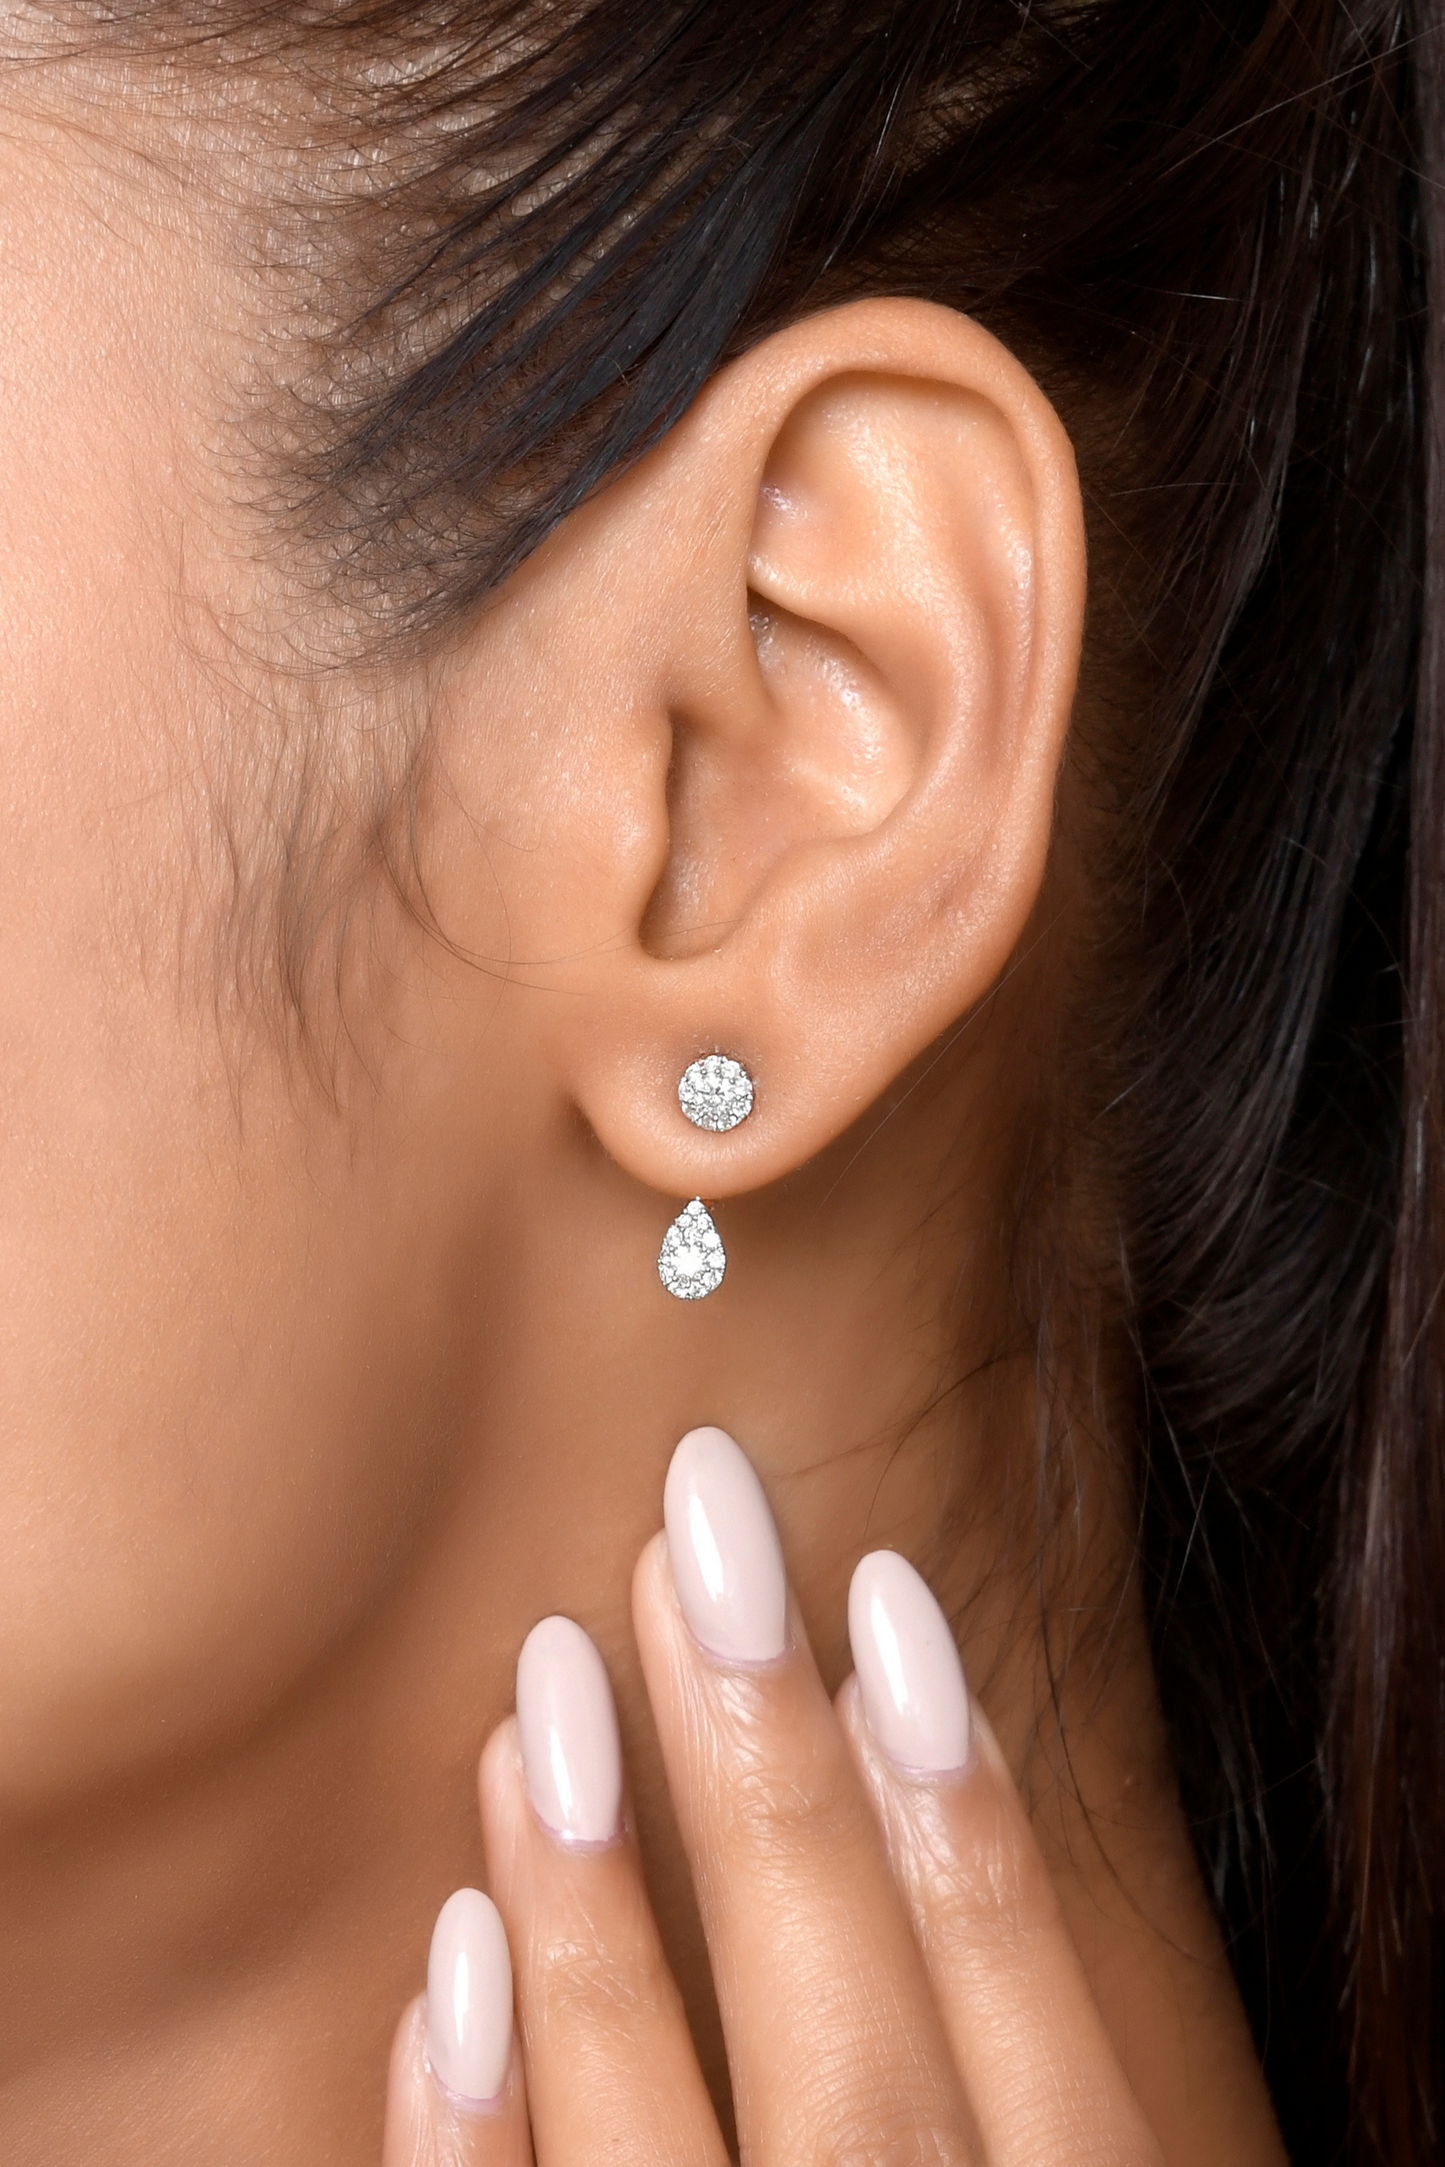 Droplet Earrings